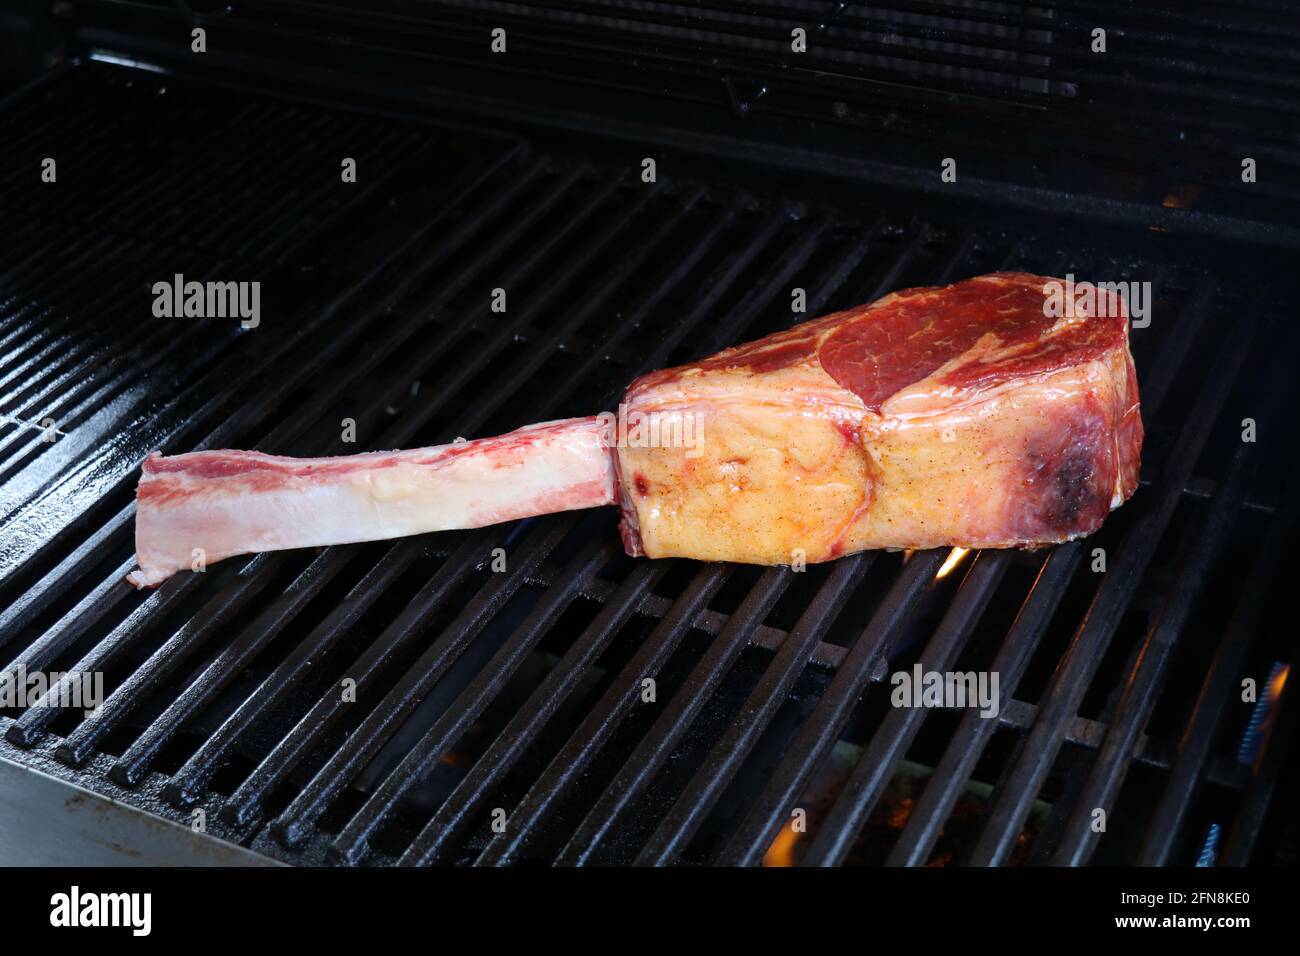 tomahawk steak on the grill Stock Photo